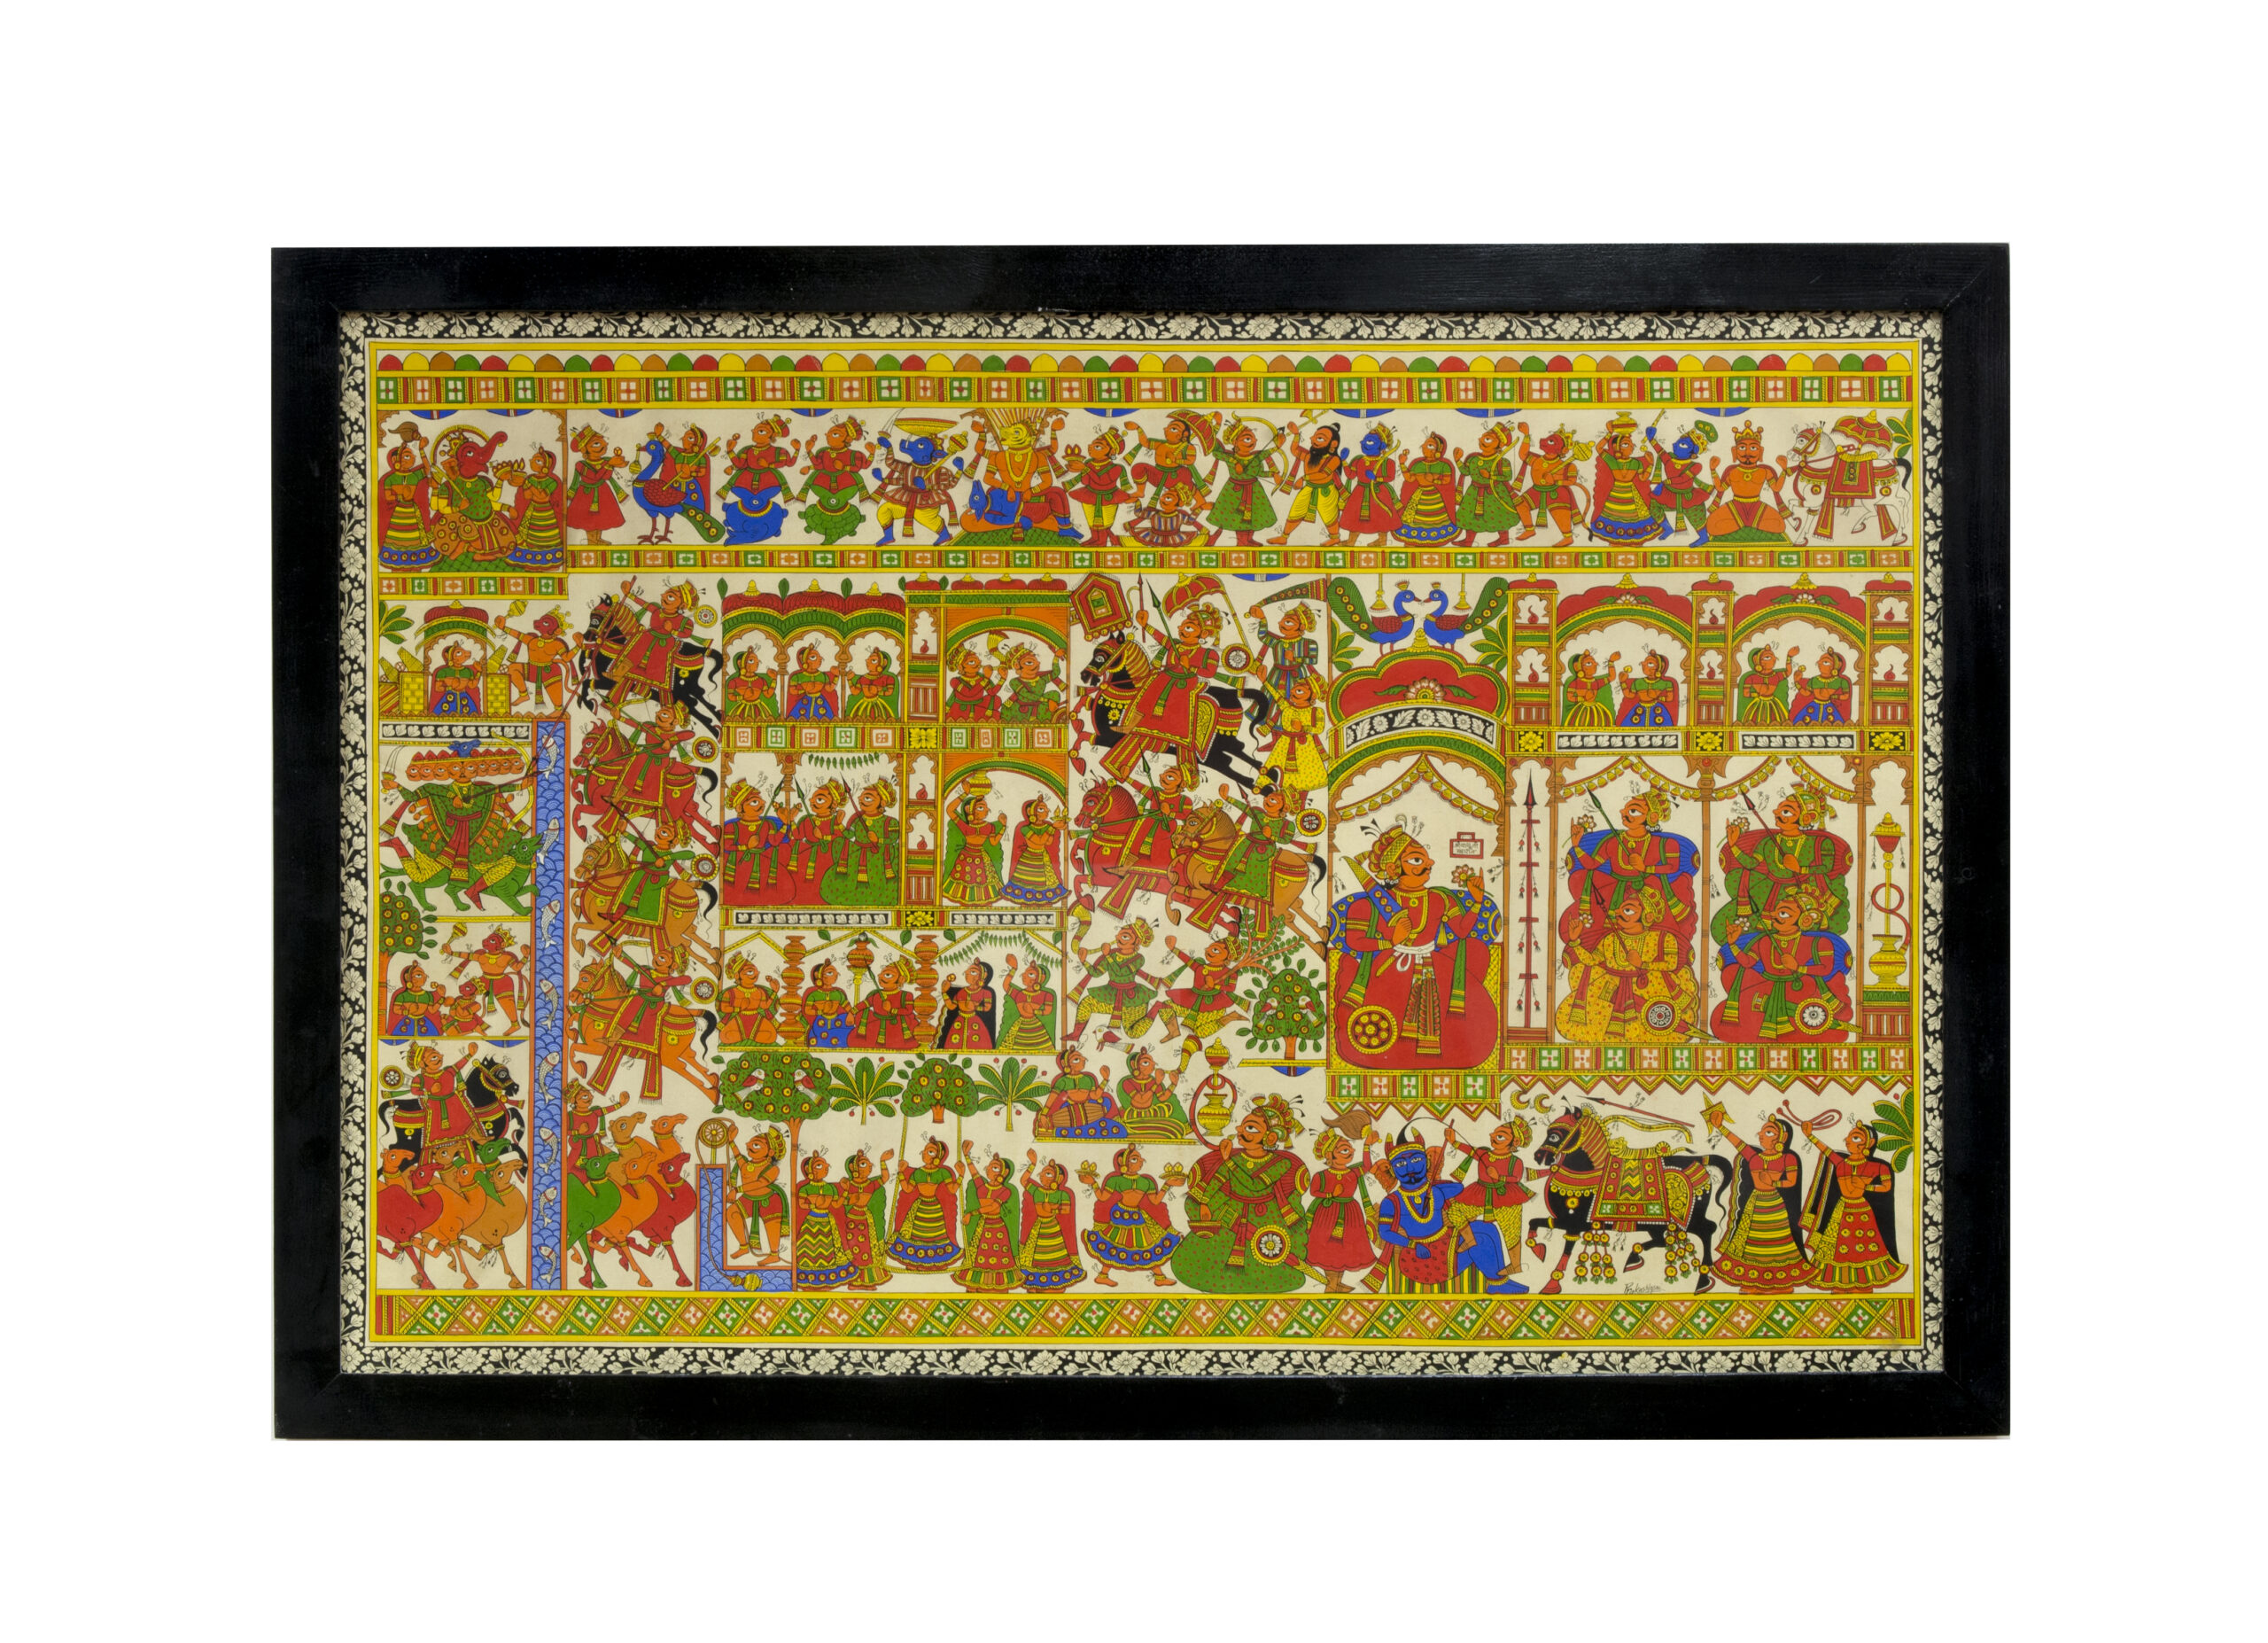 P Joshi, Phad - Conquests of Pabuji, 2018, 76 x 114cm